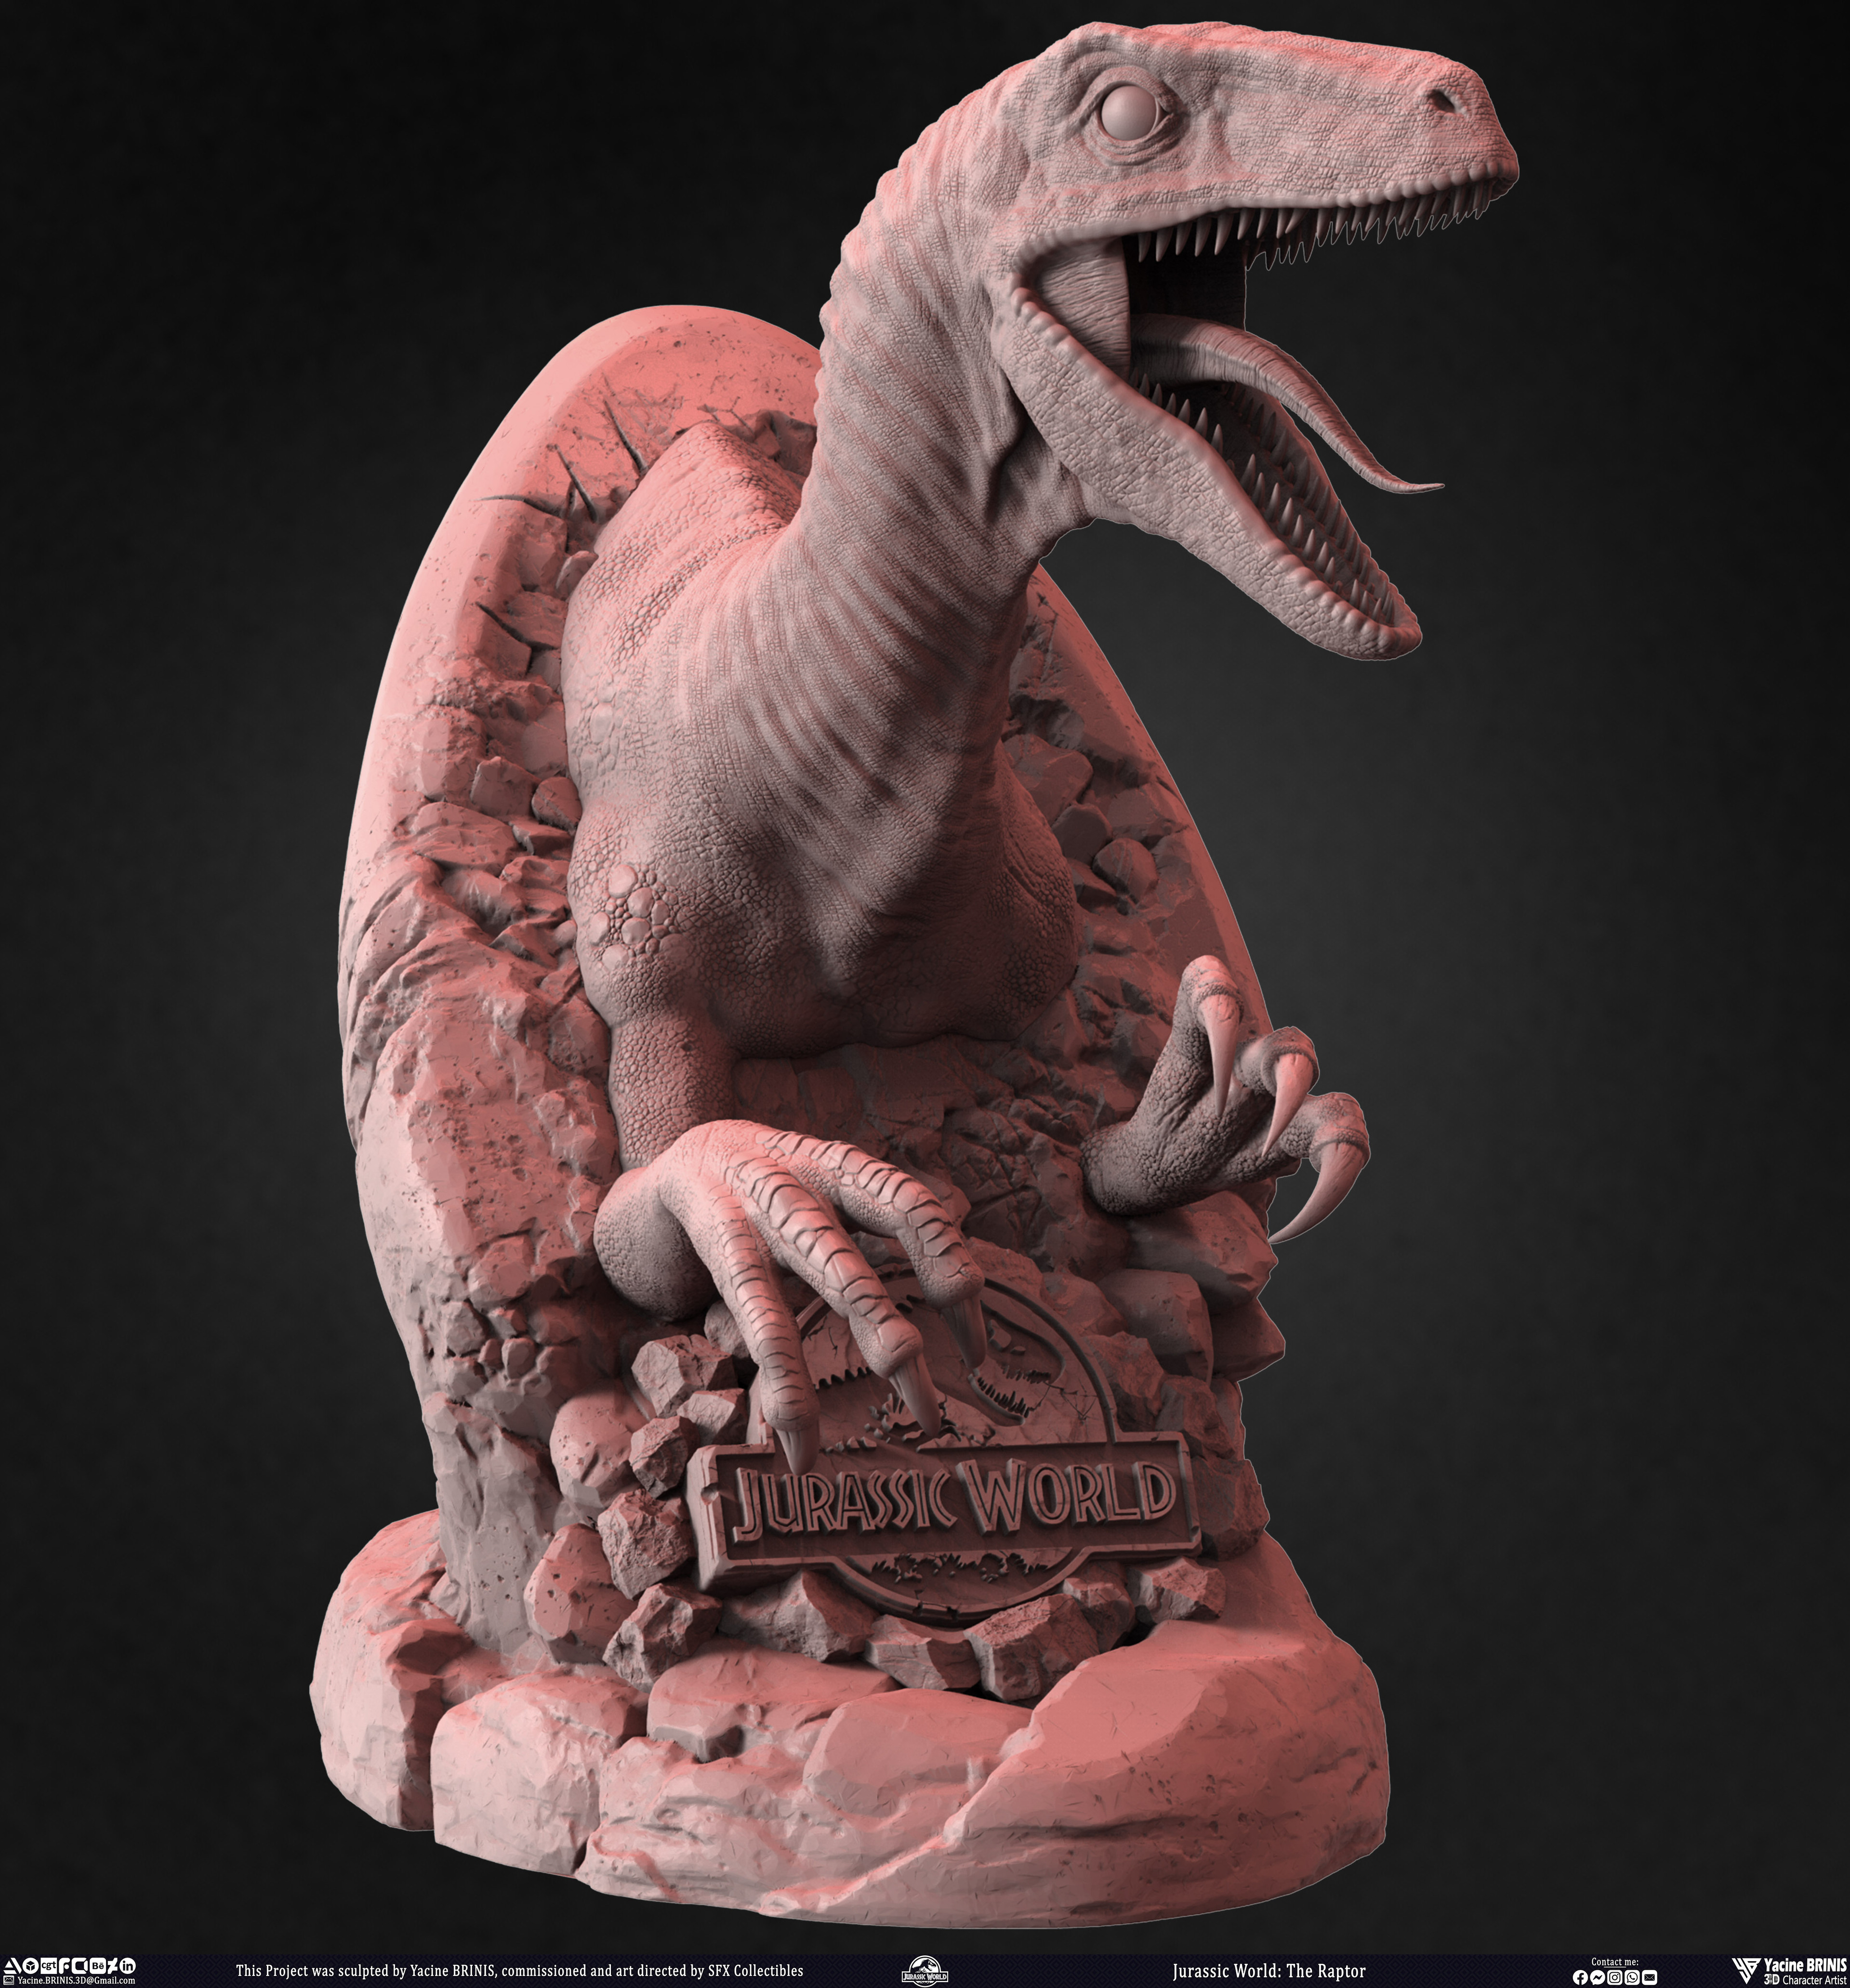 Jurassic World The Raptor sculpted by Yacine BRINIS 022